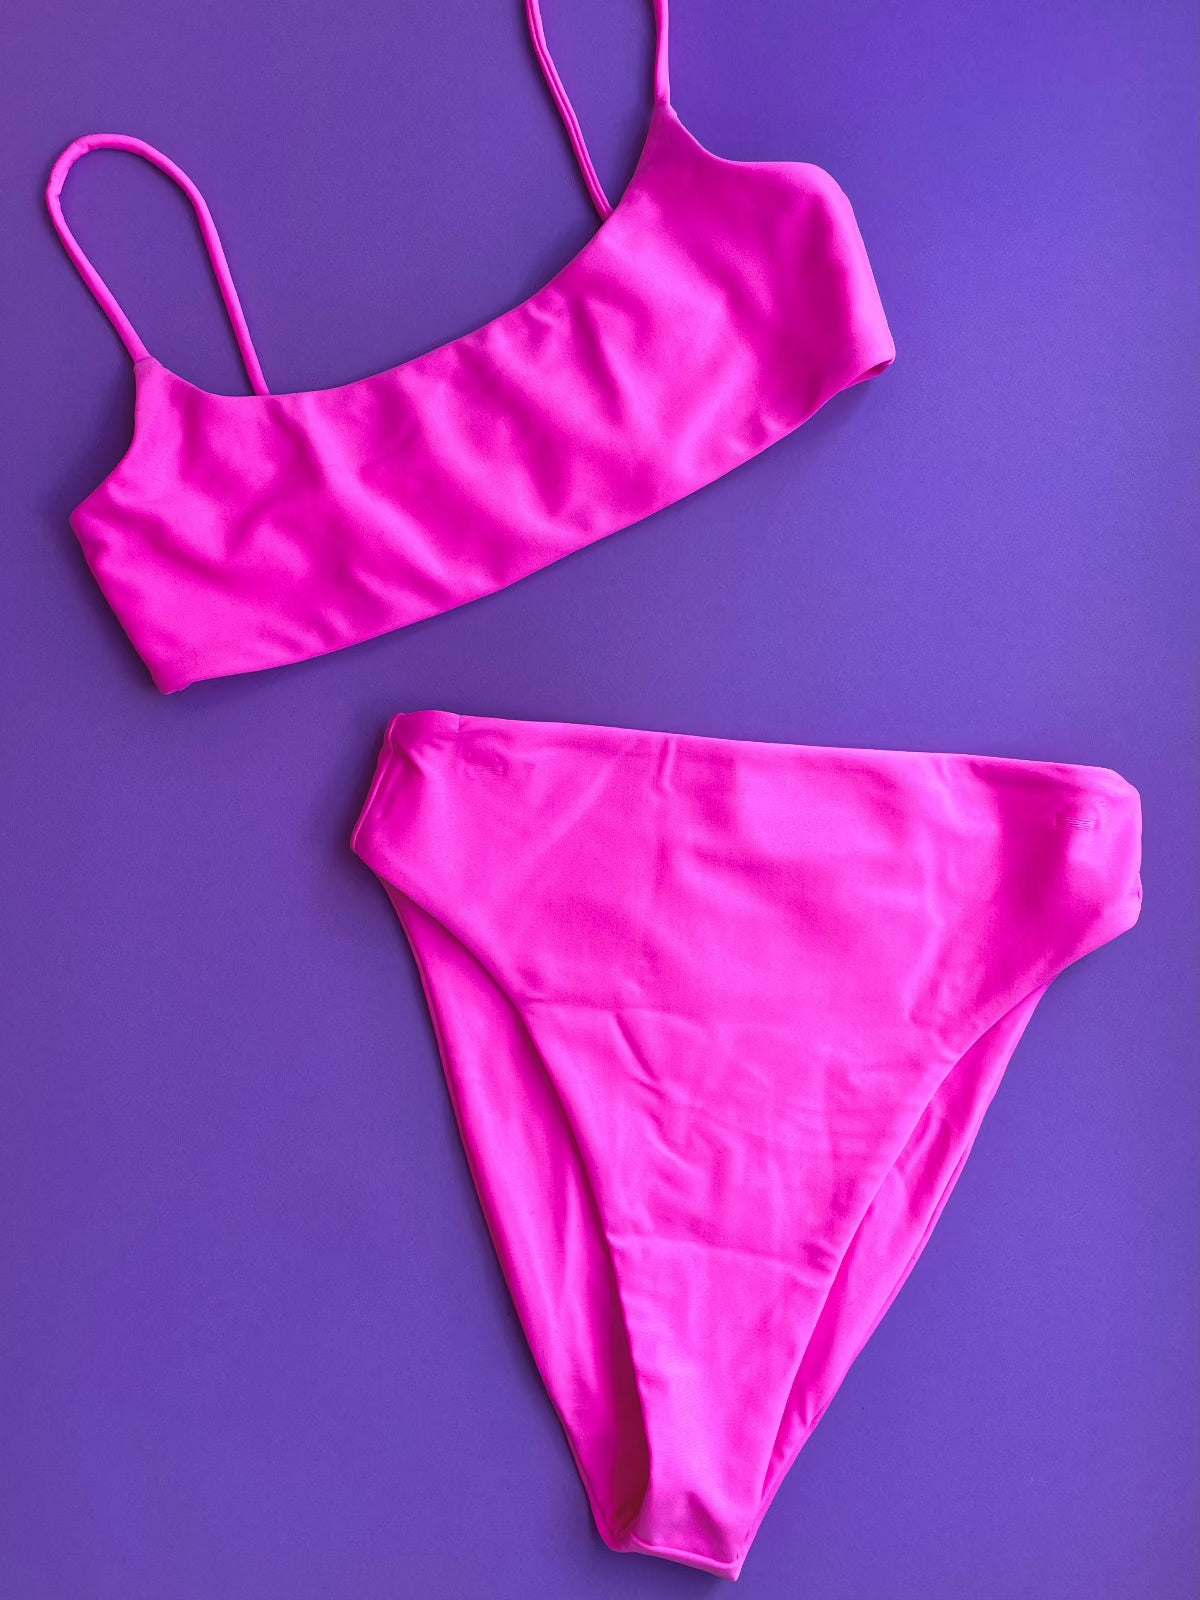 Jade Swim: Incline High Waisted Cheeky Bikini Bottom - Hot Pink